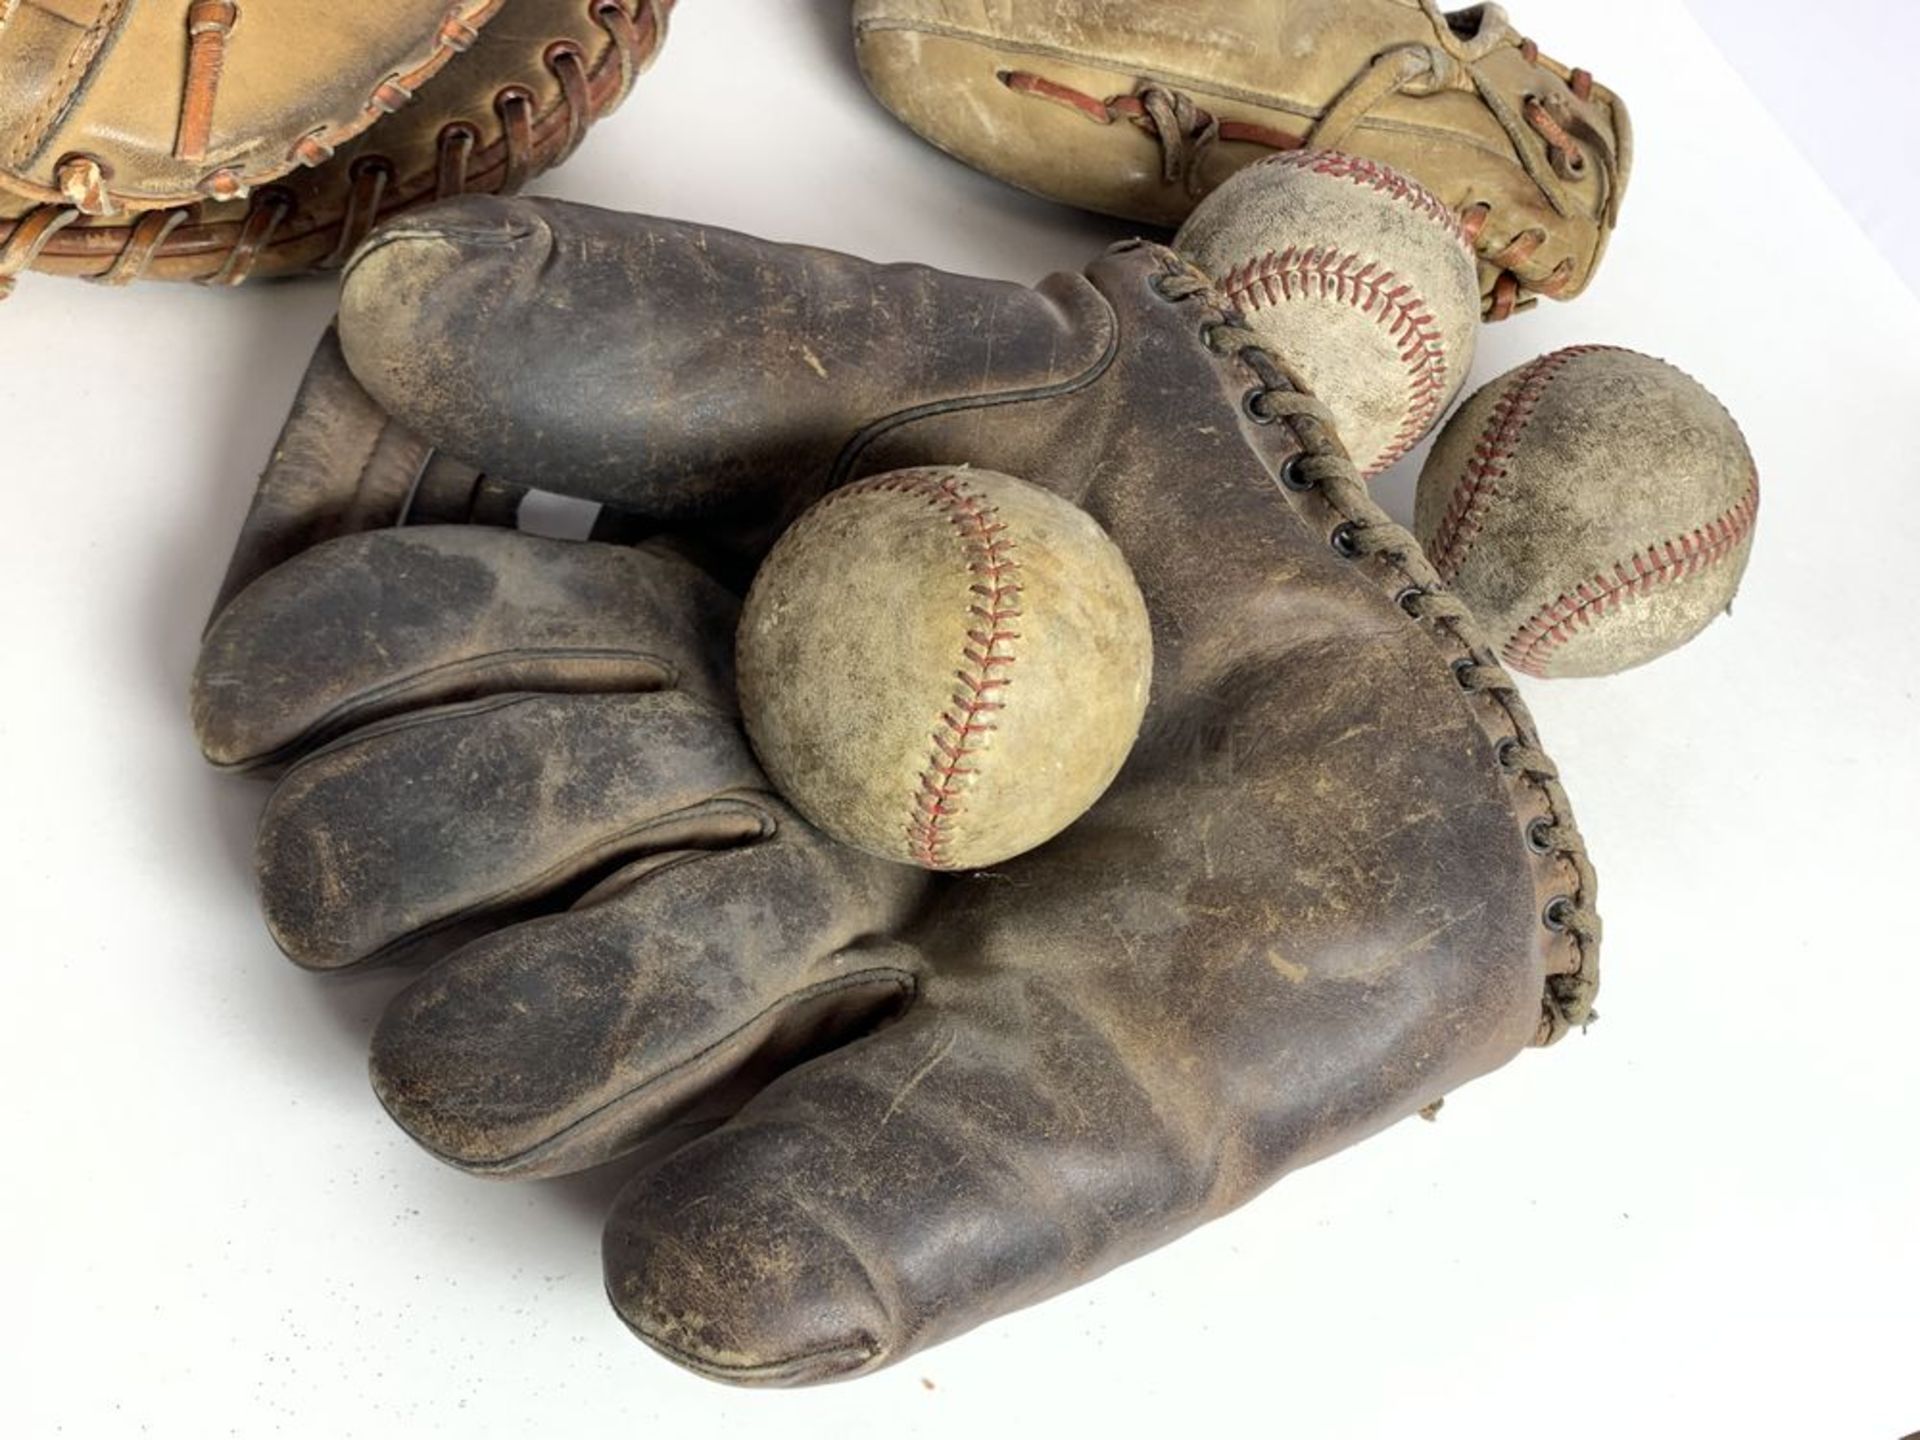 3 Vintage Baseball Gloves and Balls, Sports Memorabilia - Image 2 of 9